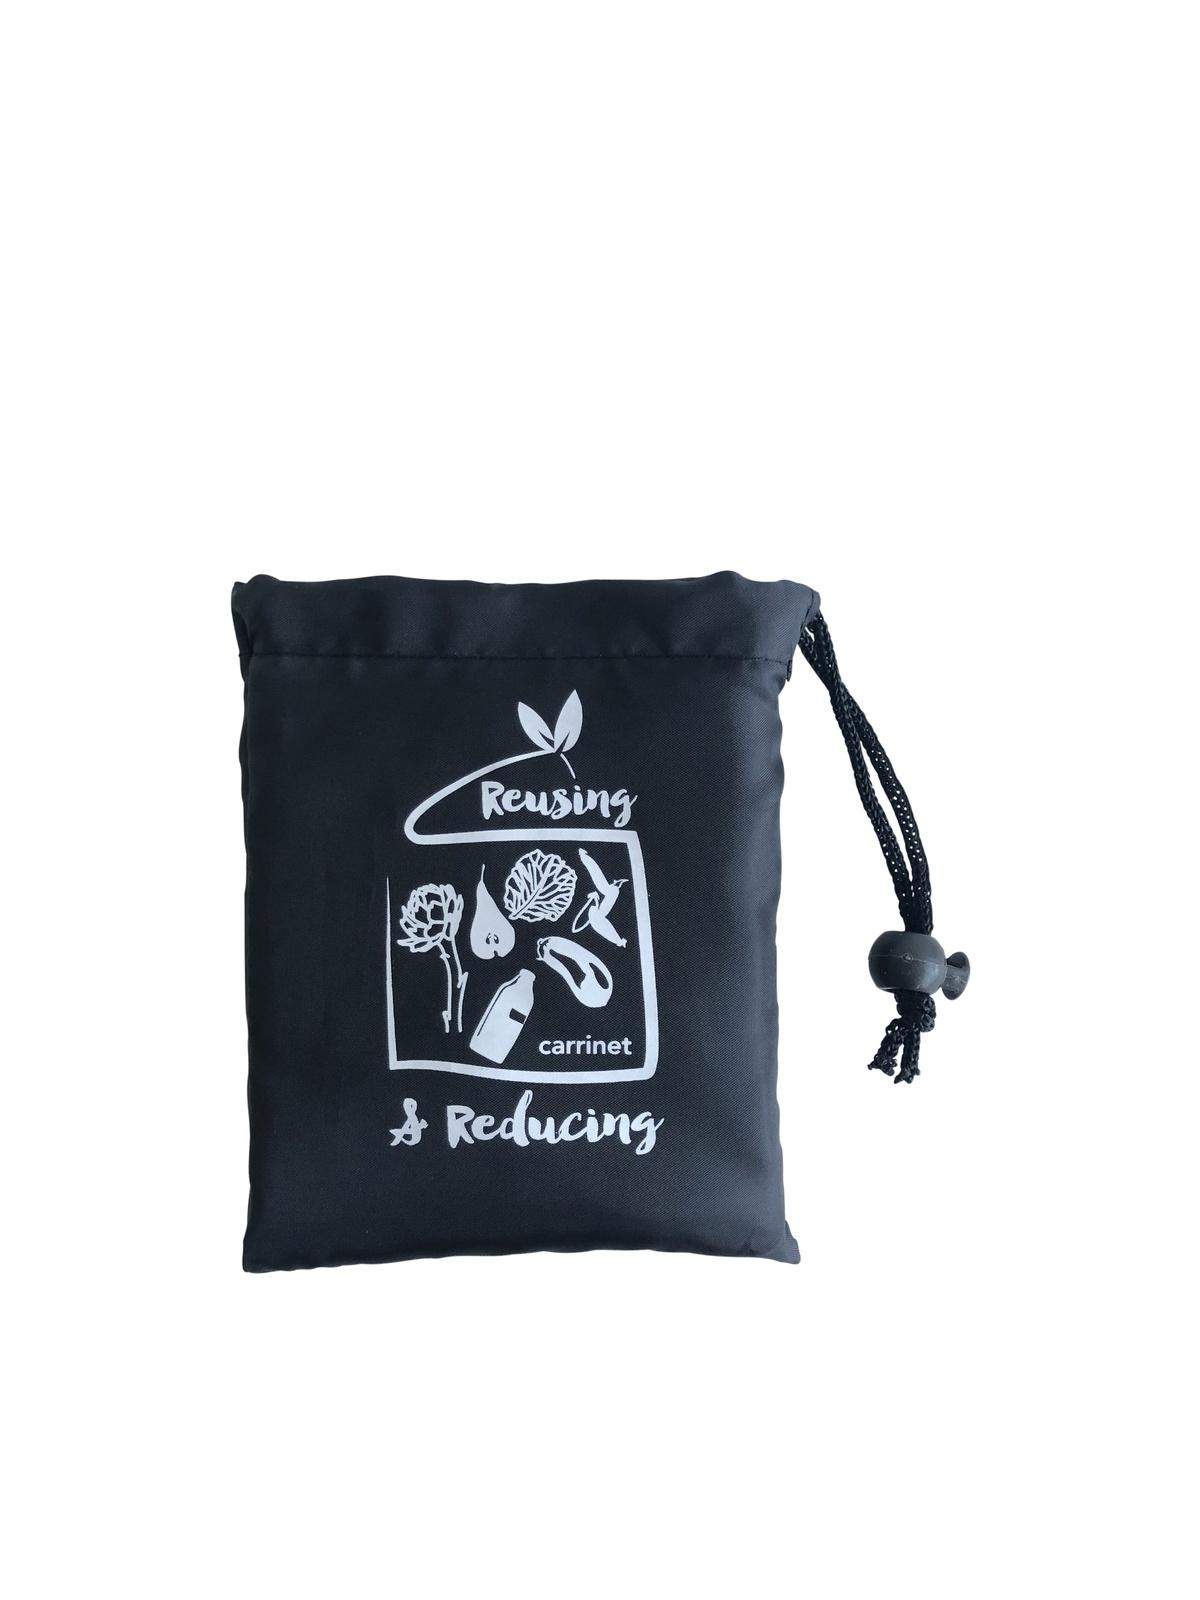 Shop Bag - "Reusing and Reducing" SVART Carrinet shop